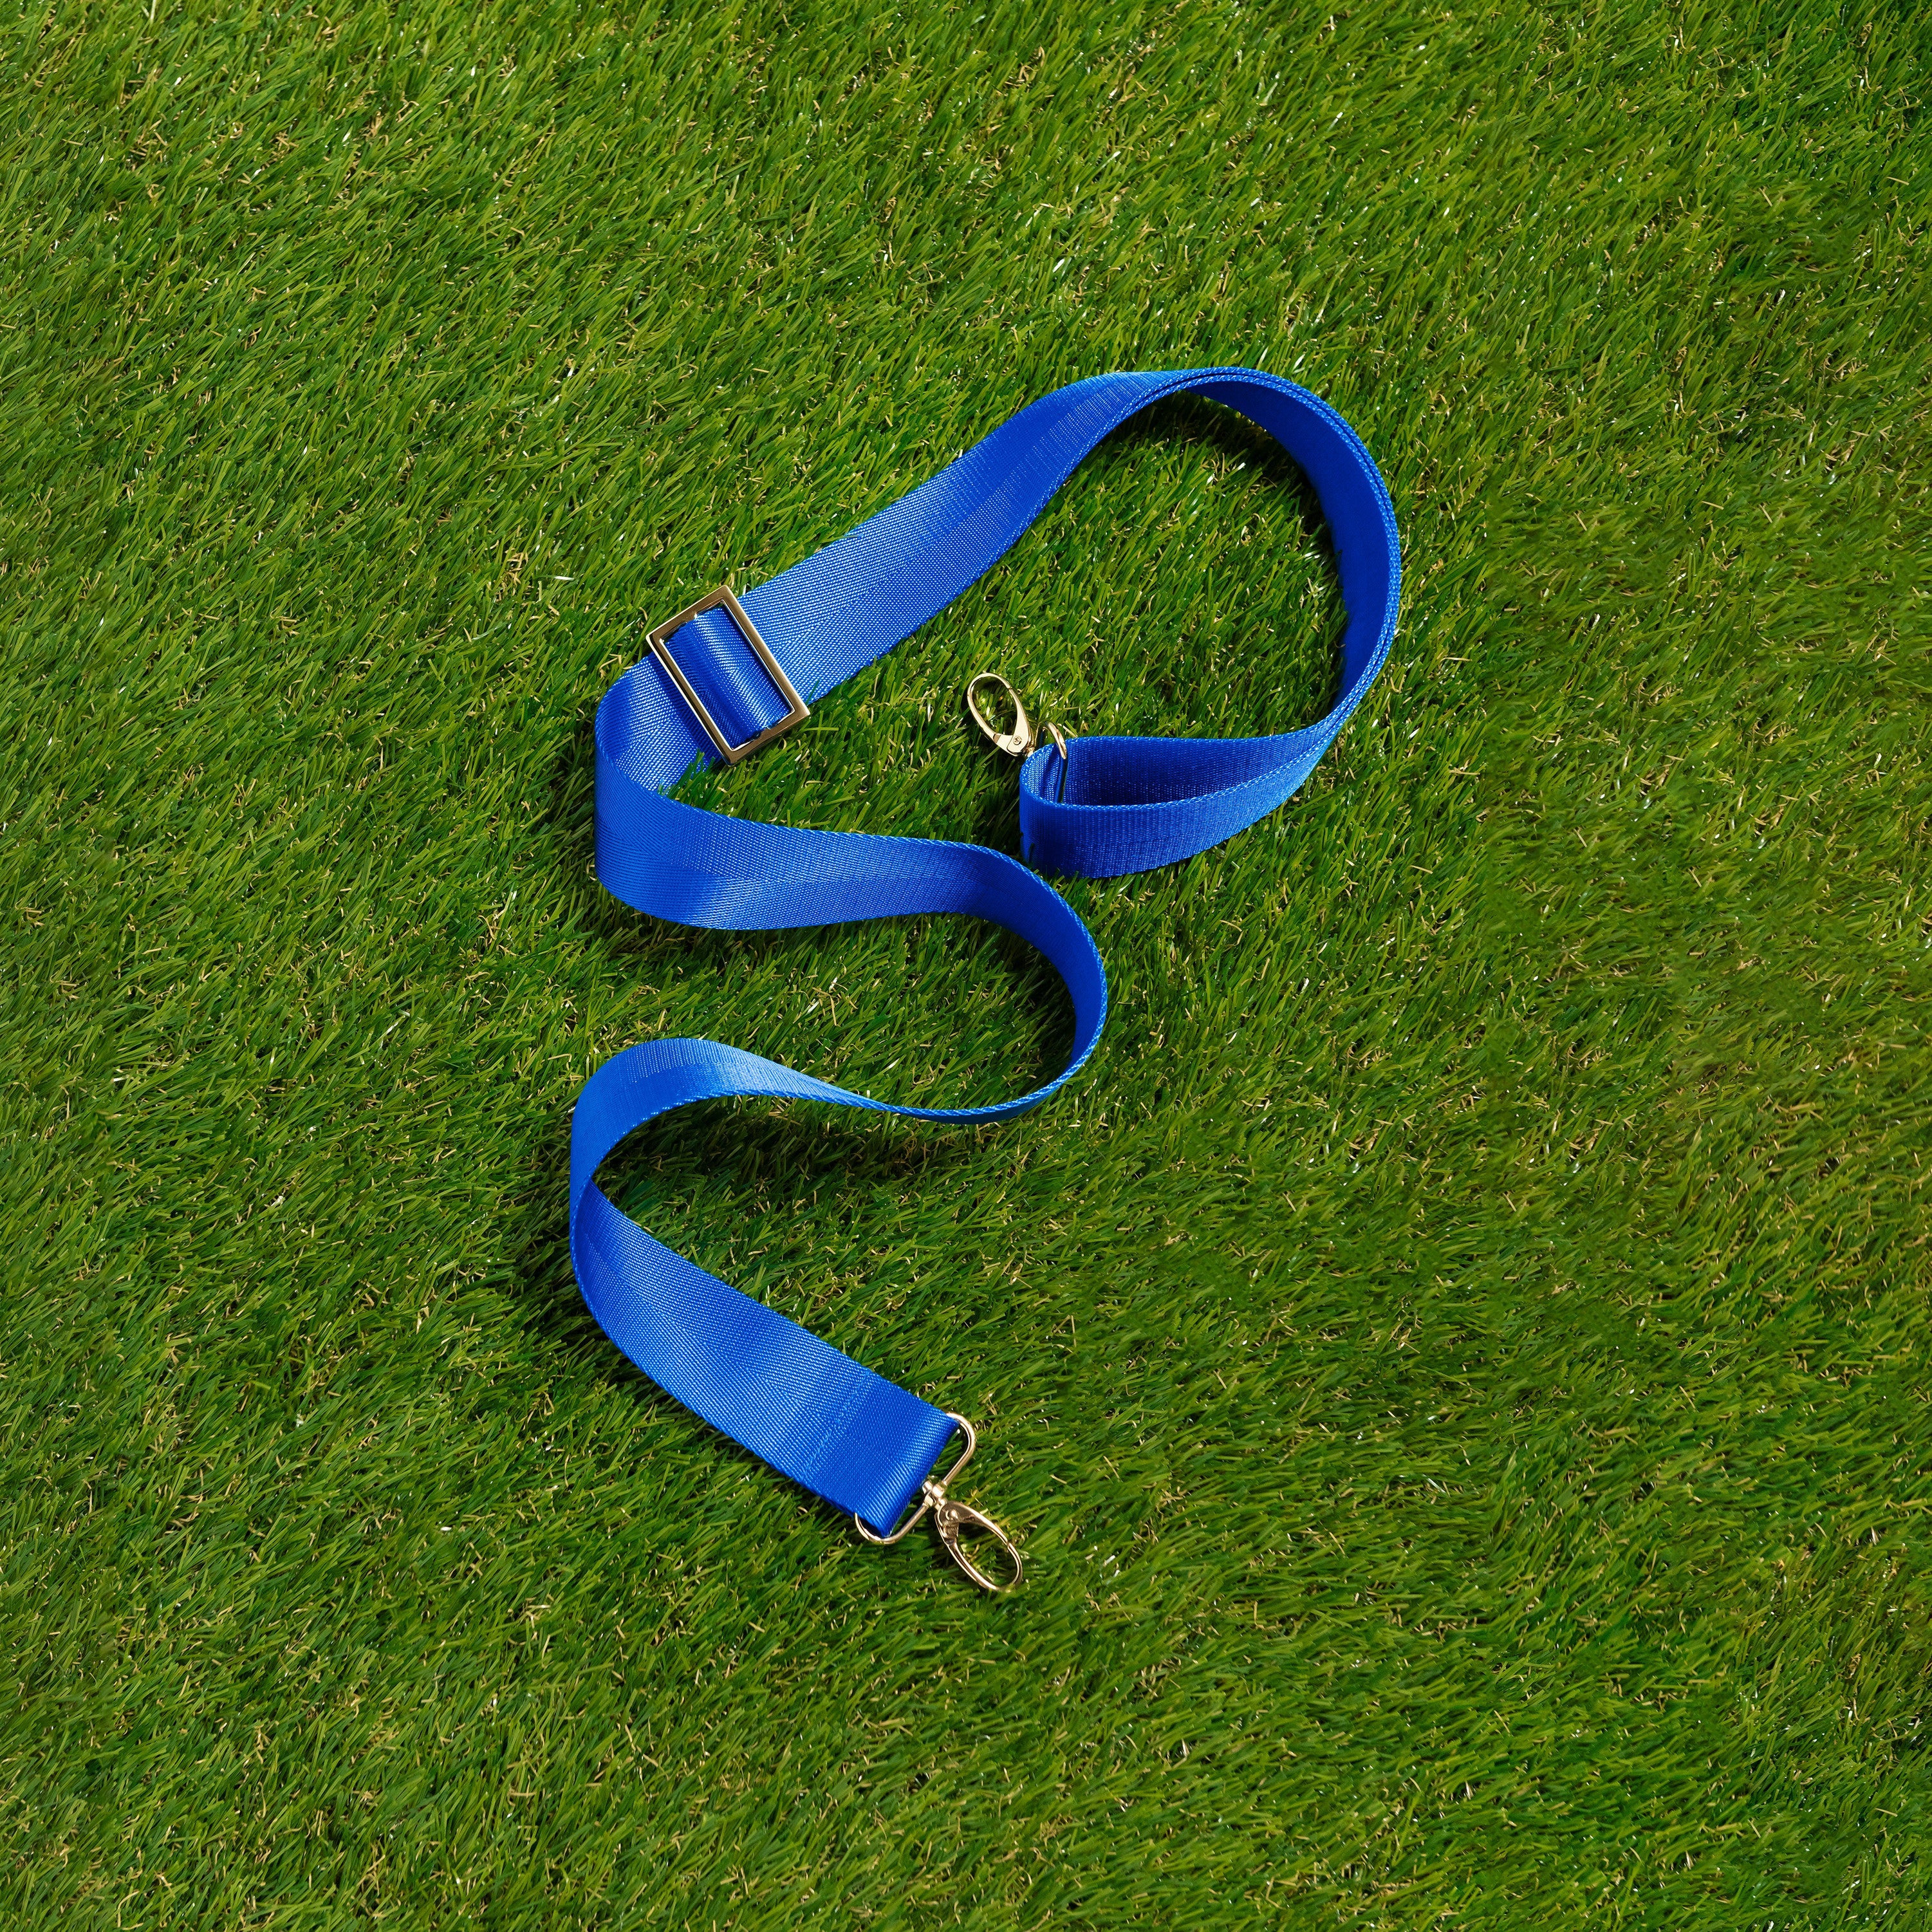 Skyler Blue’s adjustable, nylon webbing royal blue fanny pack strap with herringbone weave and gold hardware.  